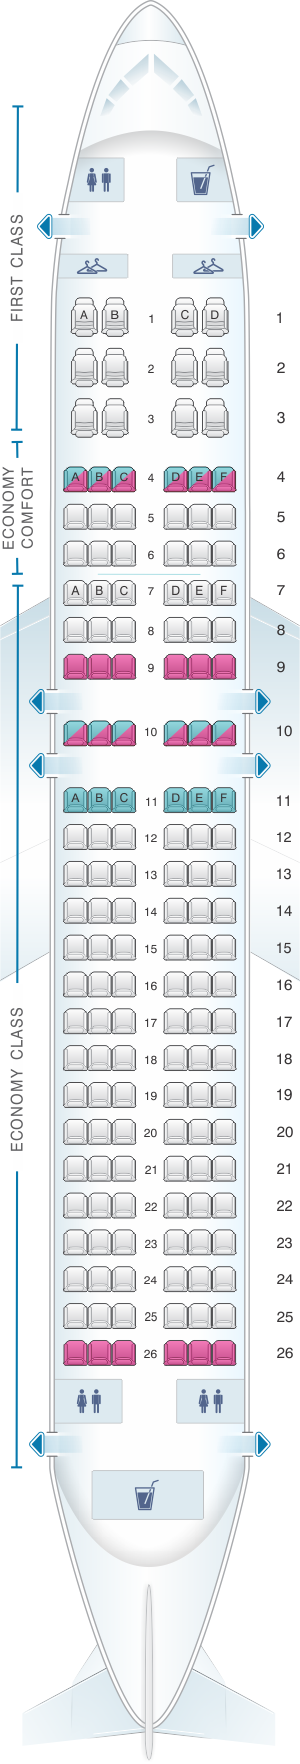 Seat Map Delta Air Lines Airbus A320 200 (32R) | SeatMaestro